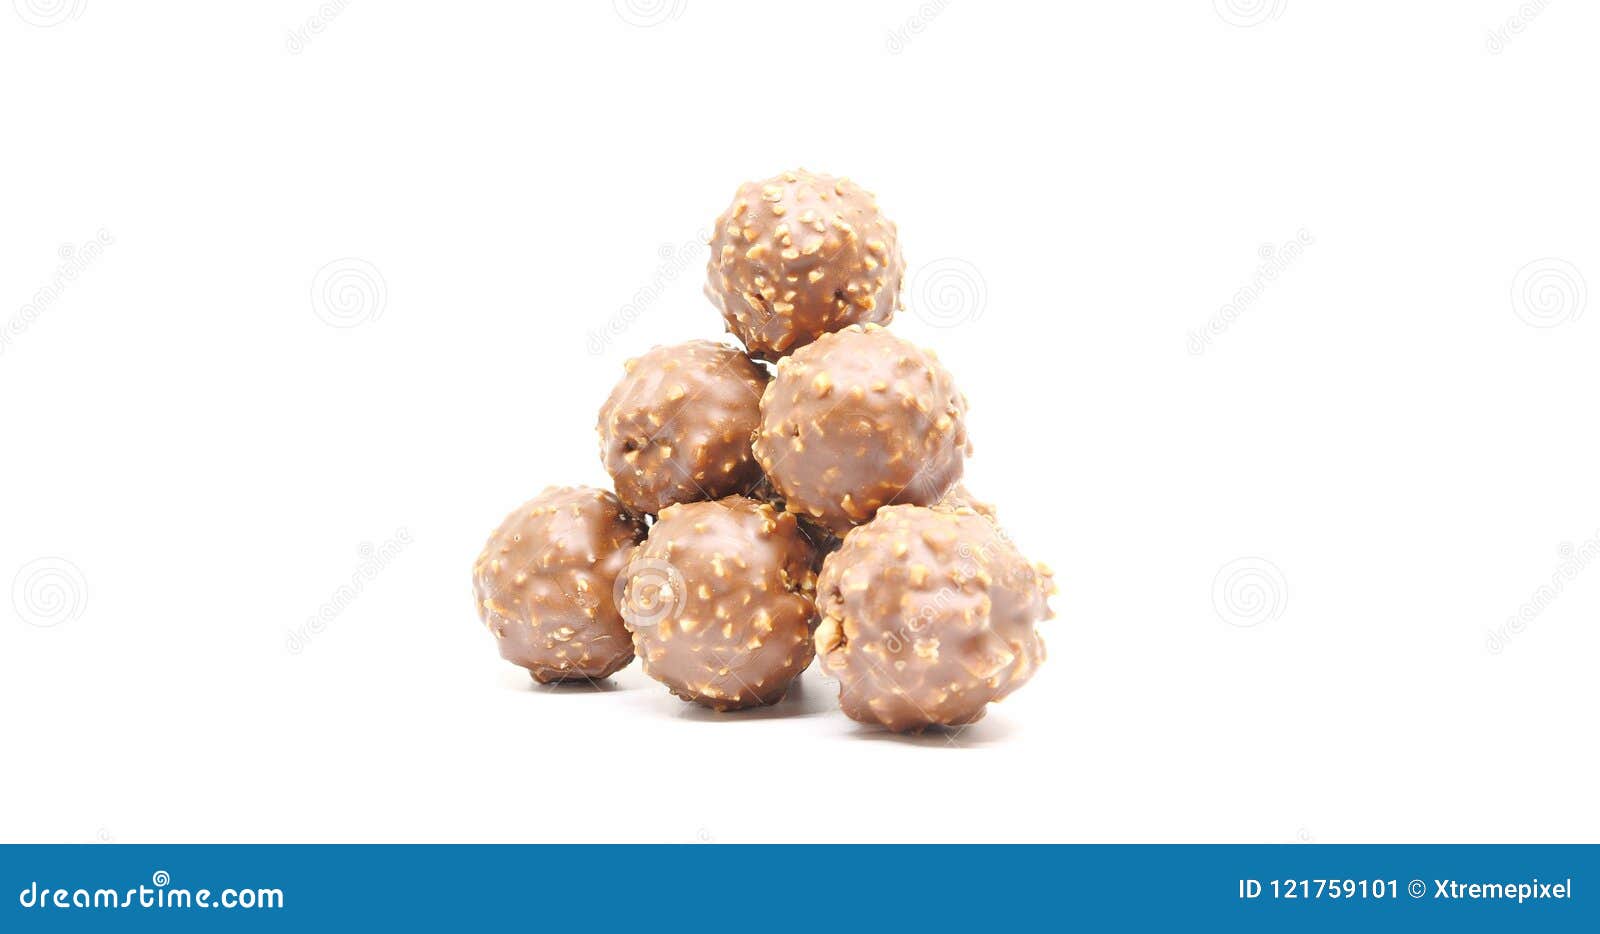 luxury nutty chocolate balls